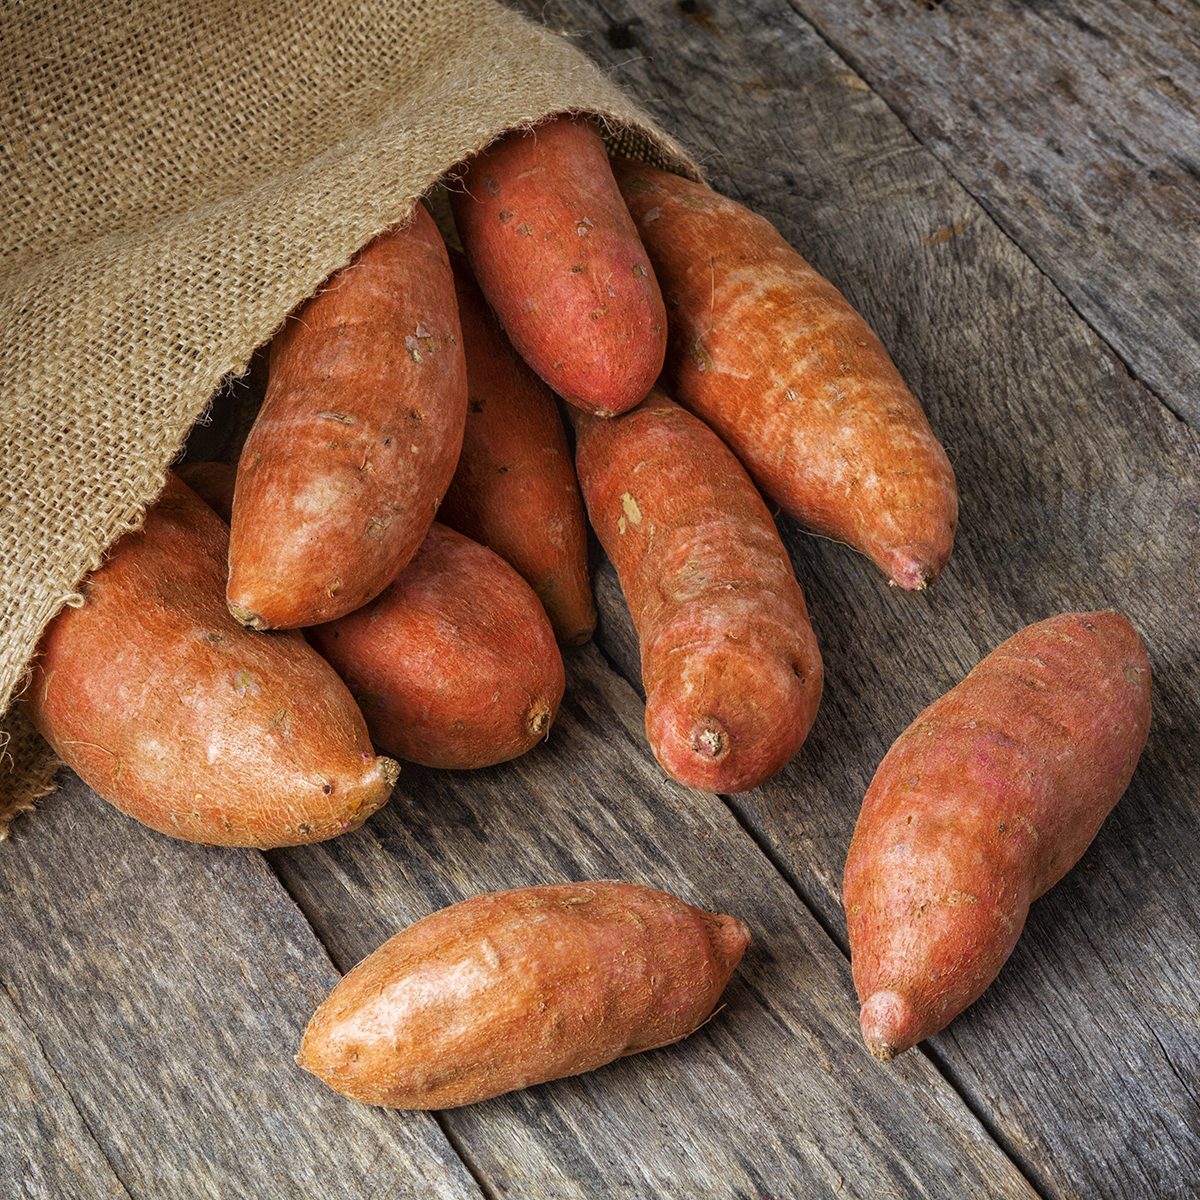 The Astonishing Nutritional Profile of Sweet Potatoes